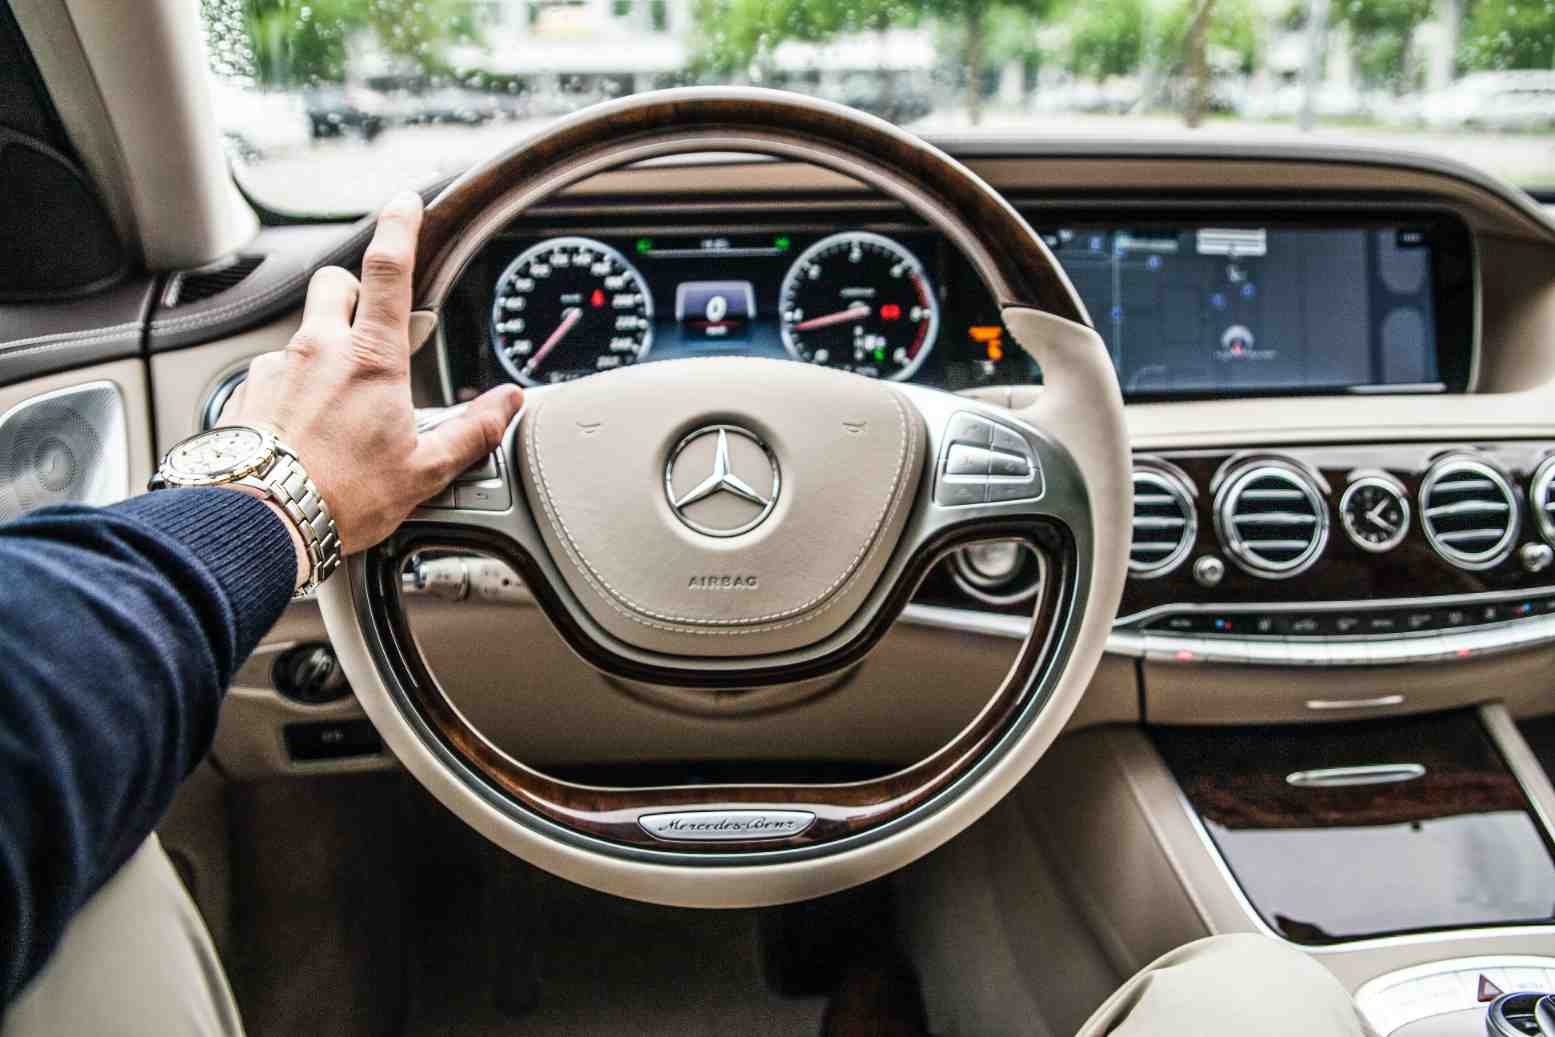 Mercedes - renting a car vs buying a car in Dubai